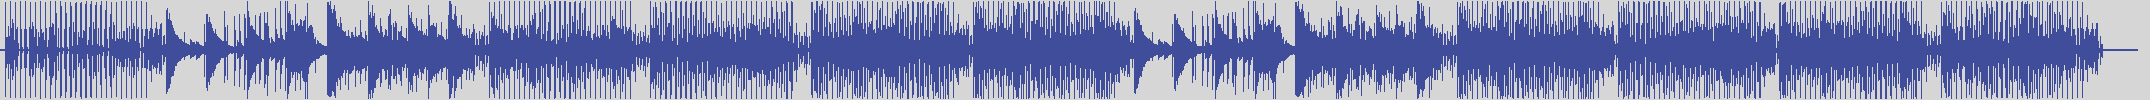 nf_boyz_records [NFY037] Roger Vena - Introduce [Basementhal Mix] audio wave form